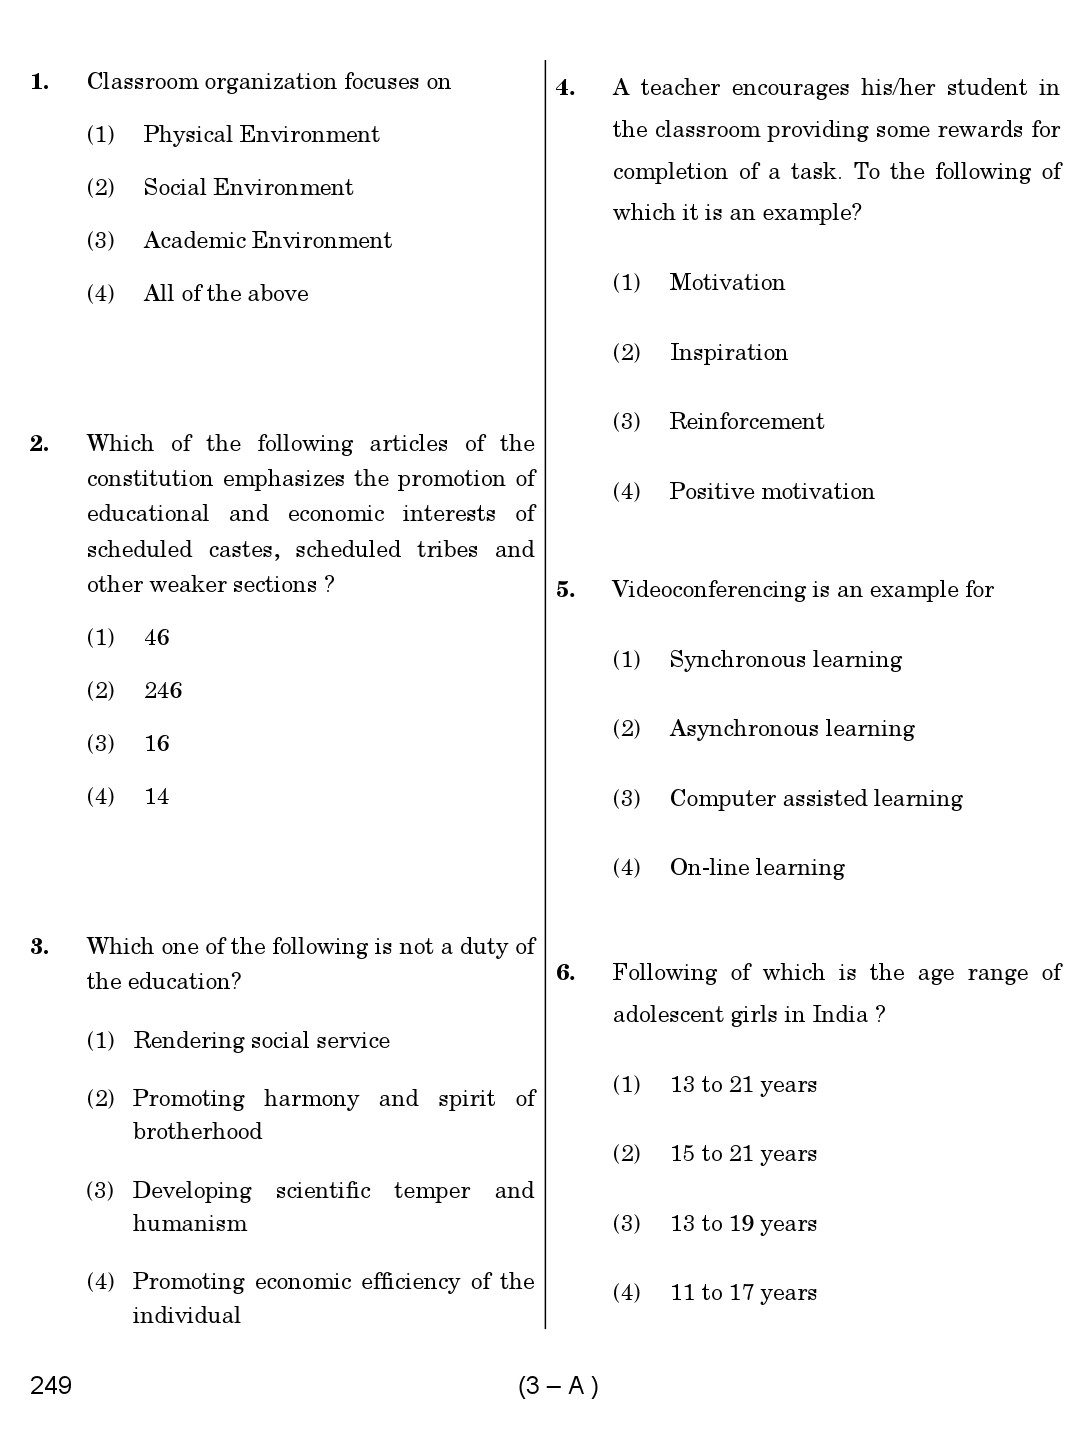 Karnataka PSC Principal Exam Sample Question Paper Subject code 249 3